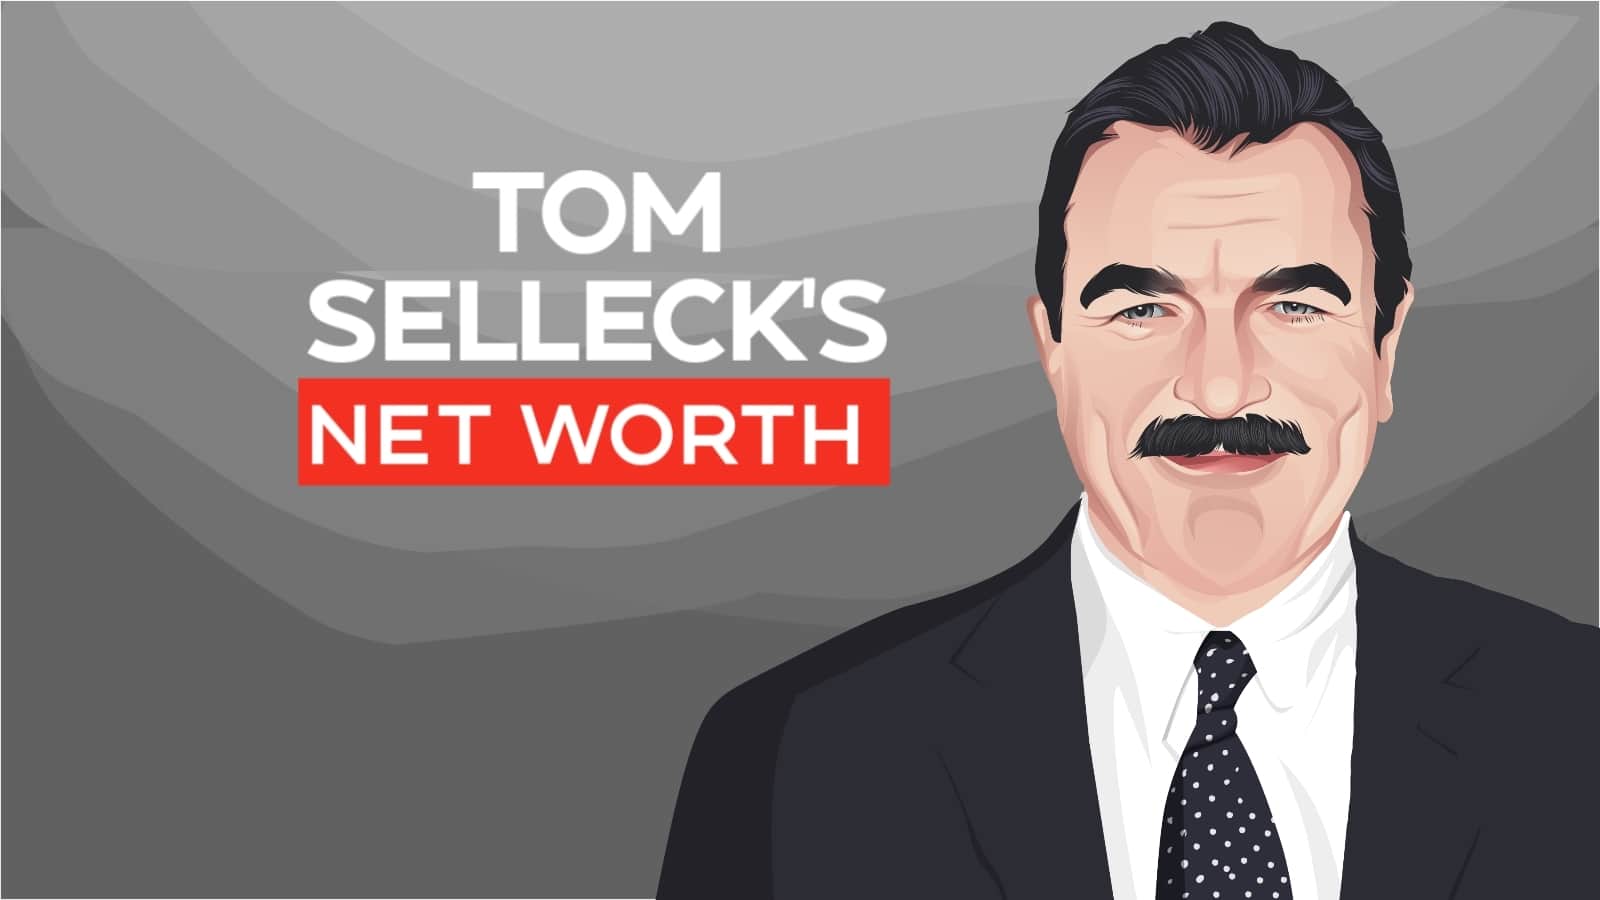 Tom Selleck's Net Worth